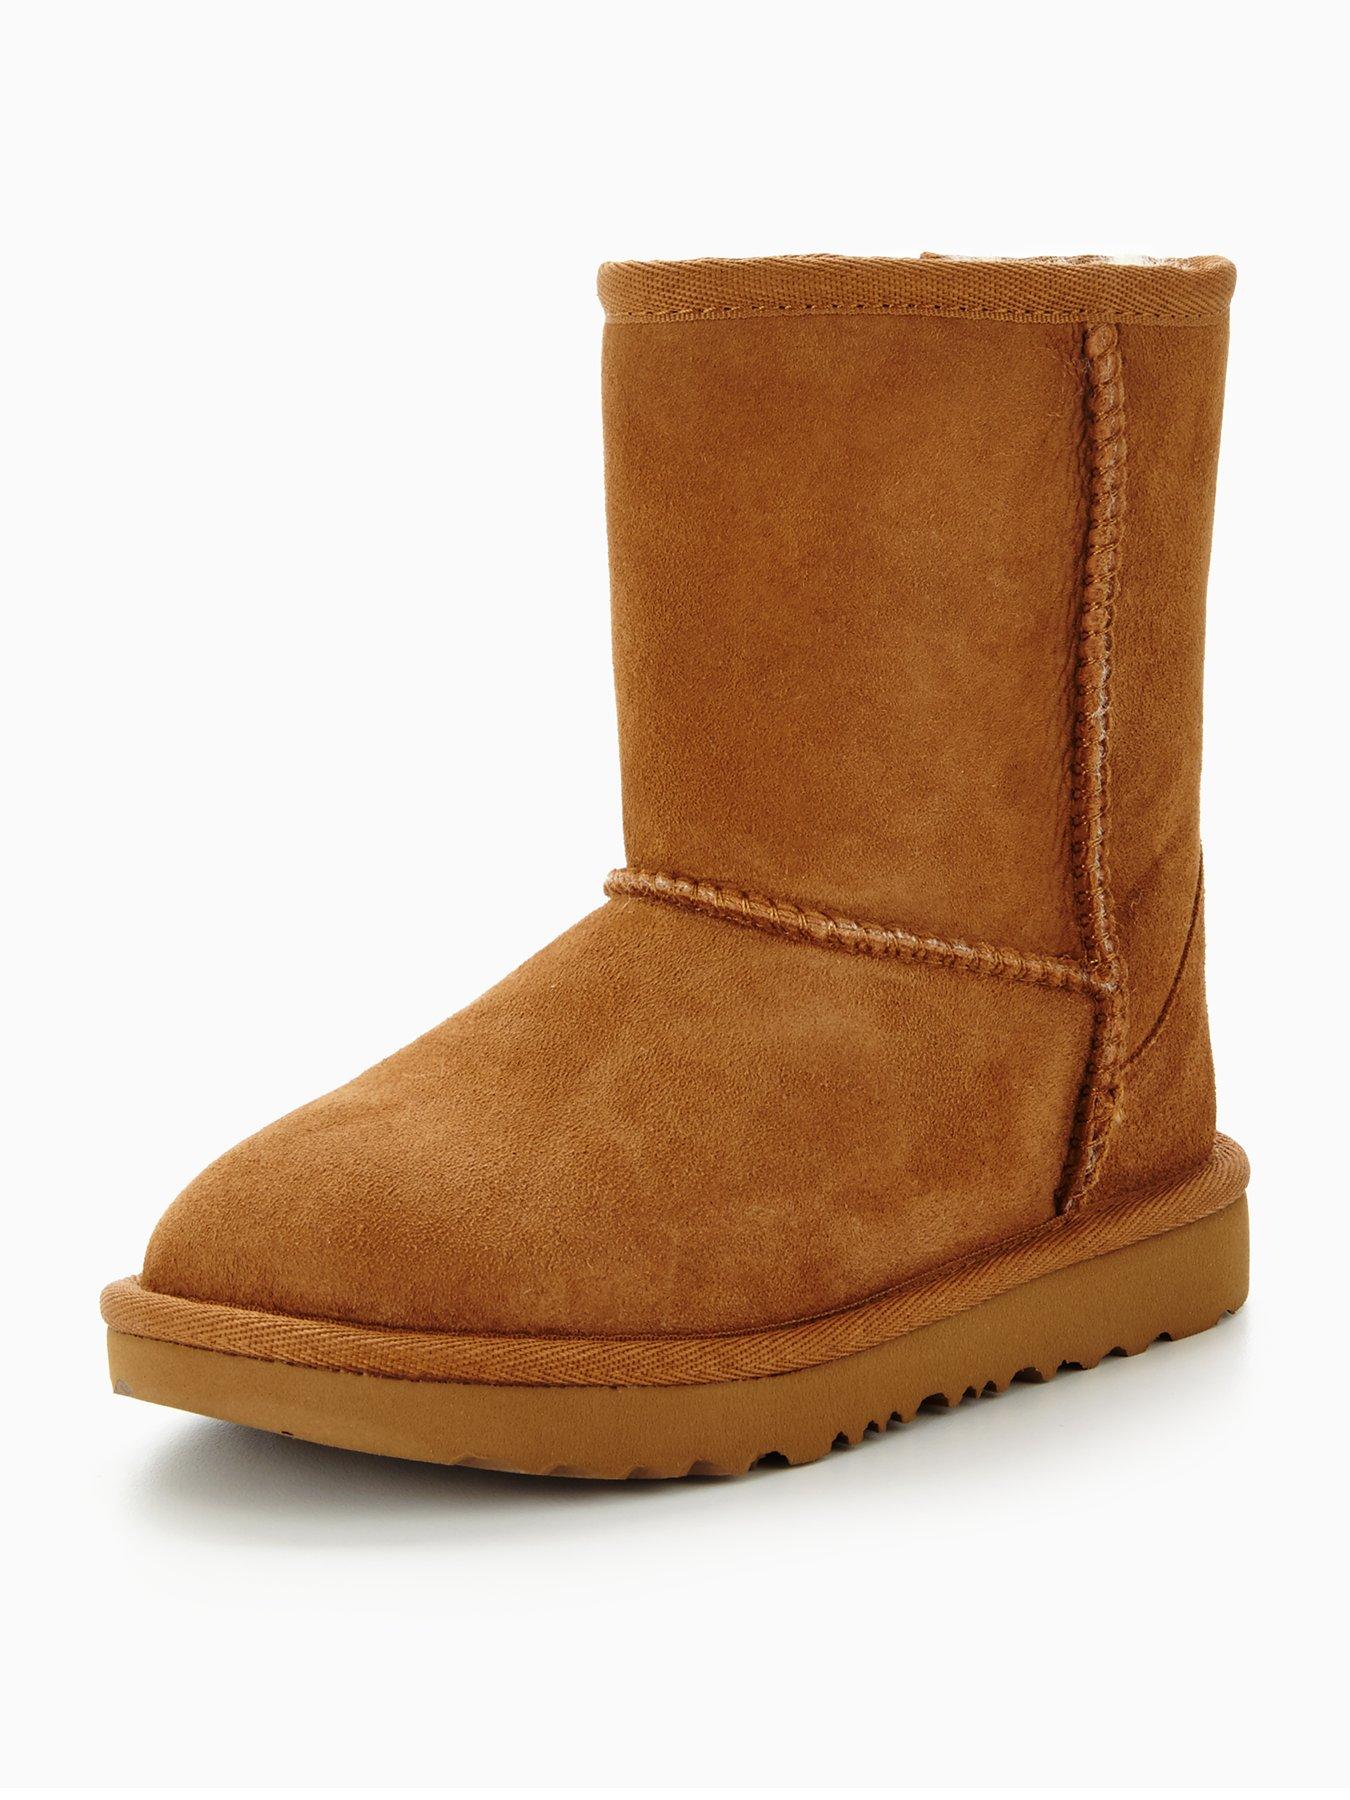 chestnut ugg boots size 5